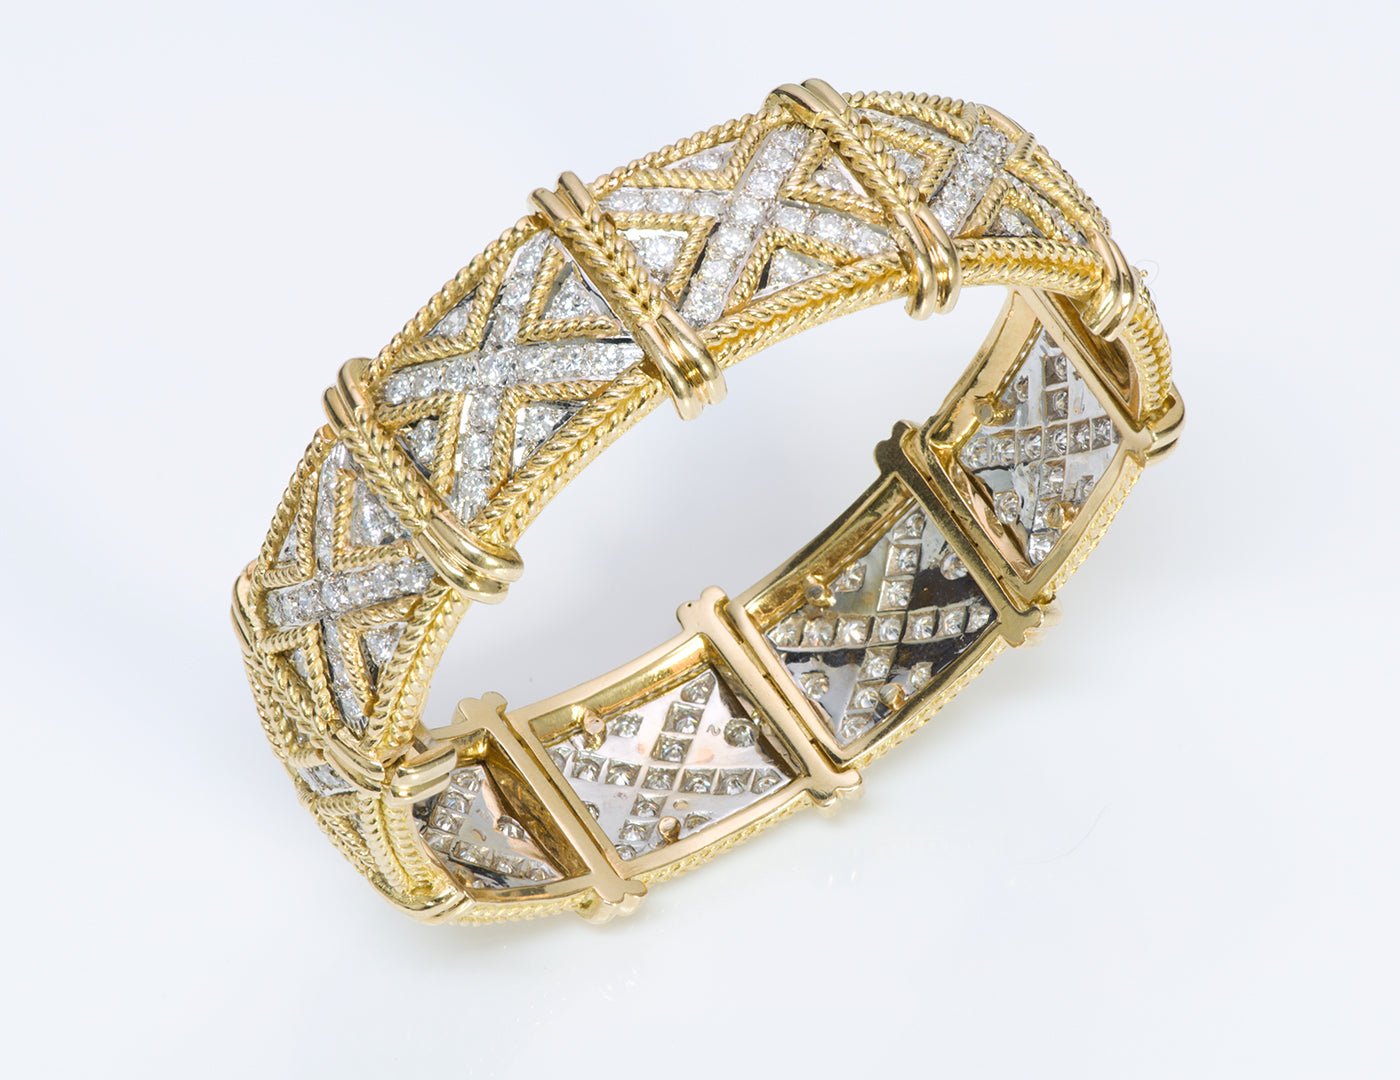 Hammerman Brothers 18K Yellow Gold Diamond Bracelet